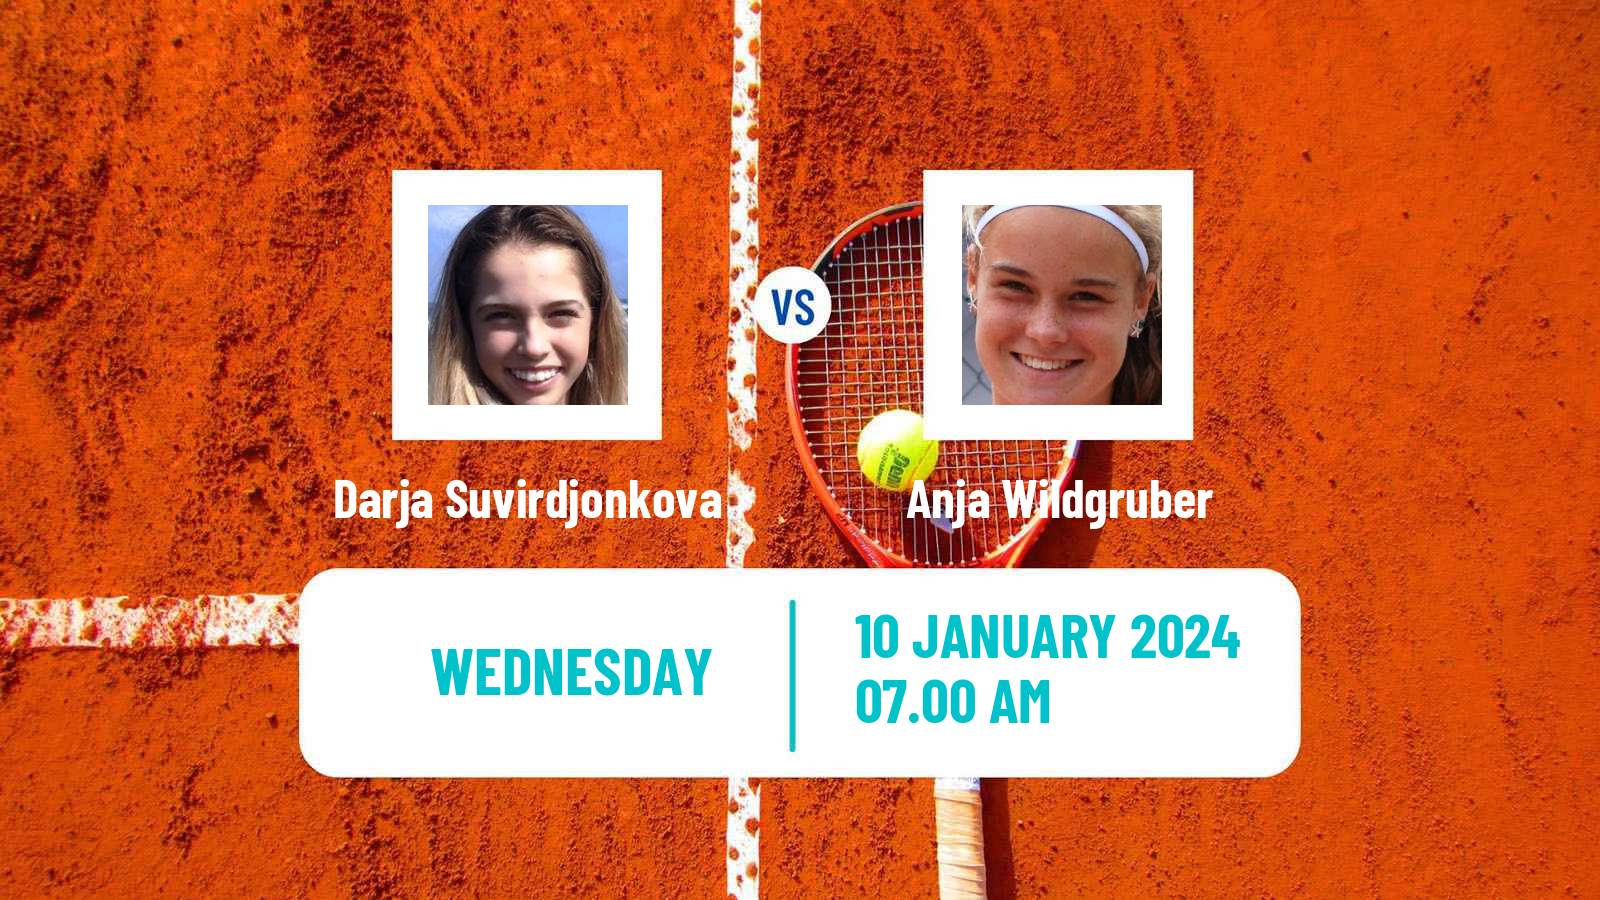 Tennis ITF W15 Monastir 2 Women Darja Suvirdjonkova - Anja Wildgruber